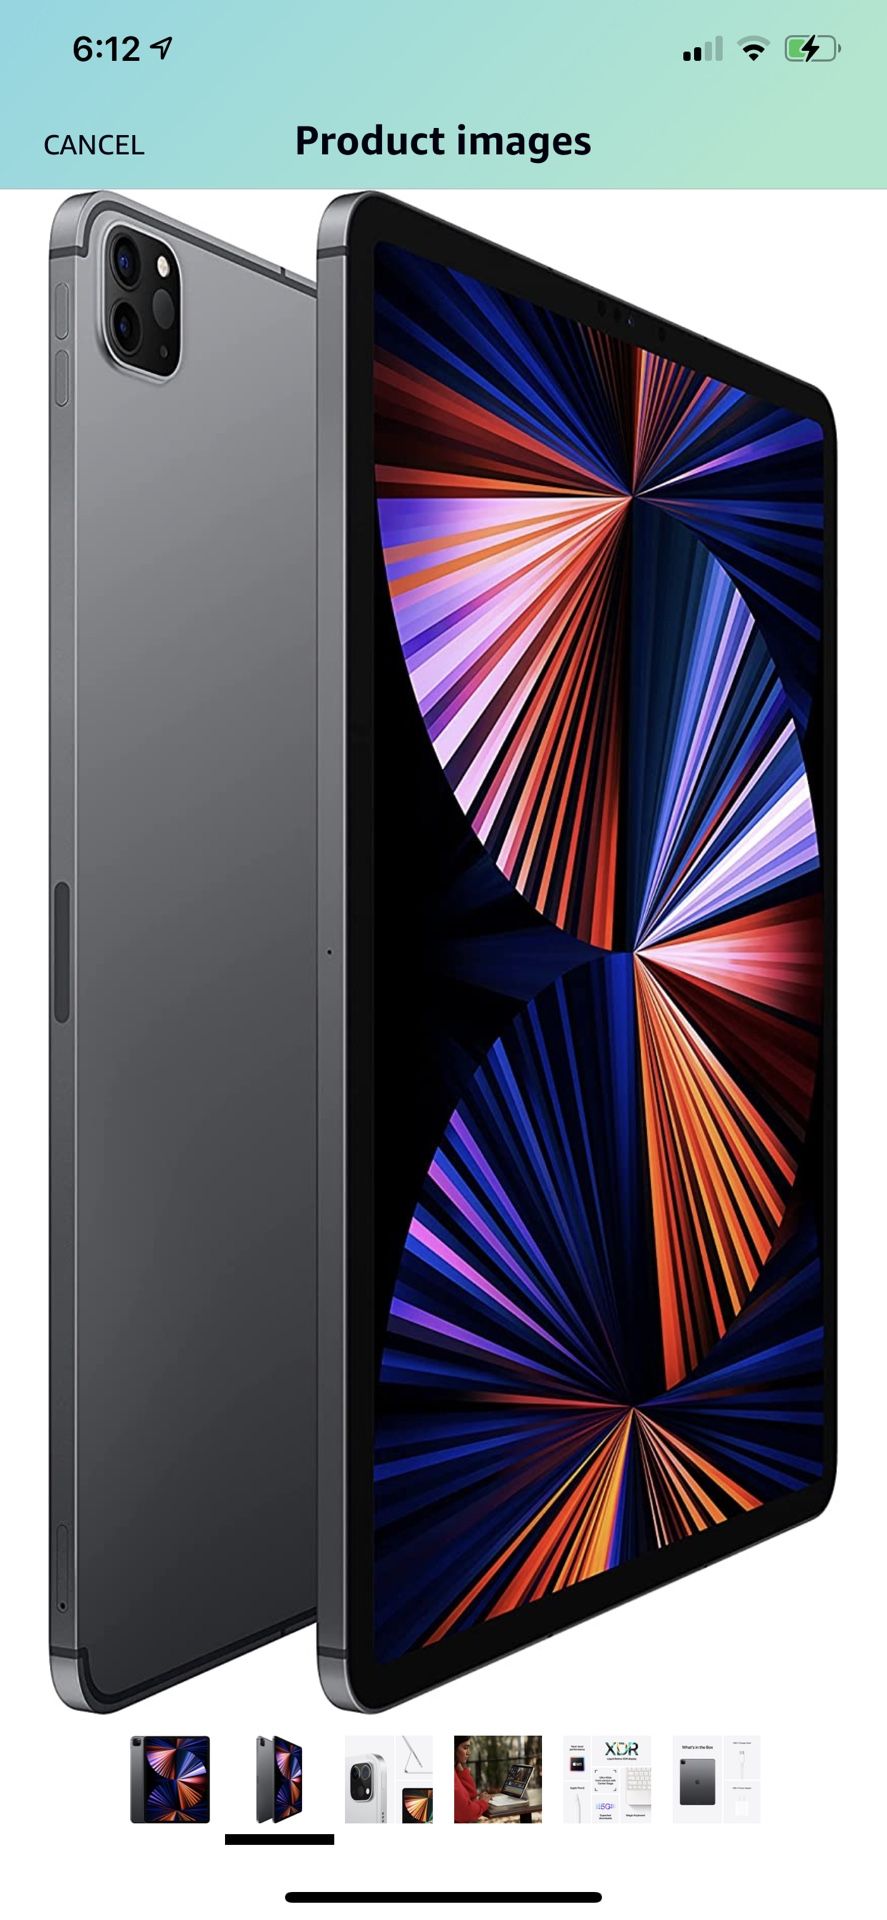  2021 Apple 12.9-inch iPad Pro Wi‑Fi + Cellular 256GB - Space Gray